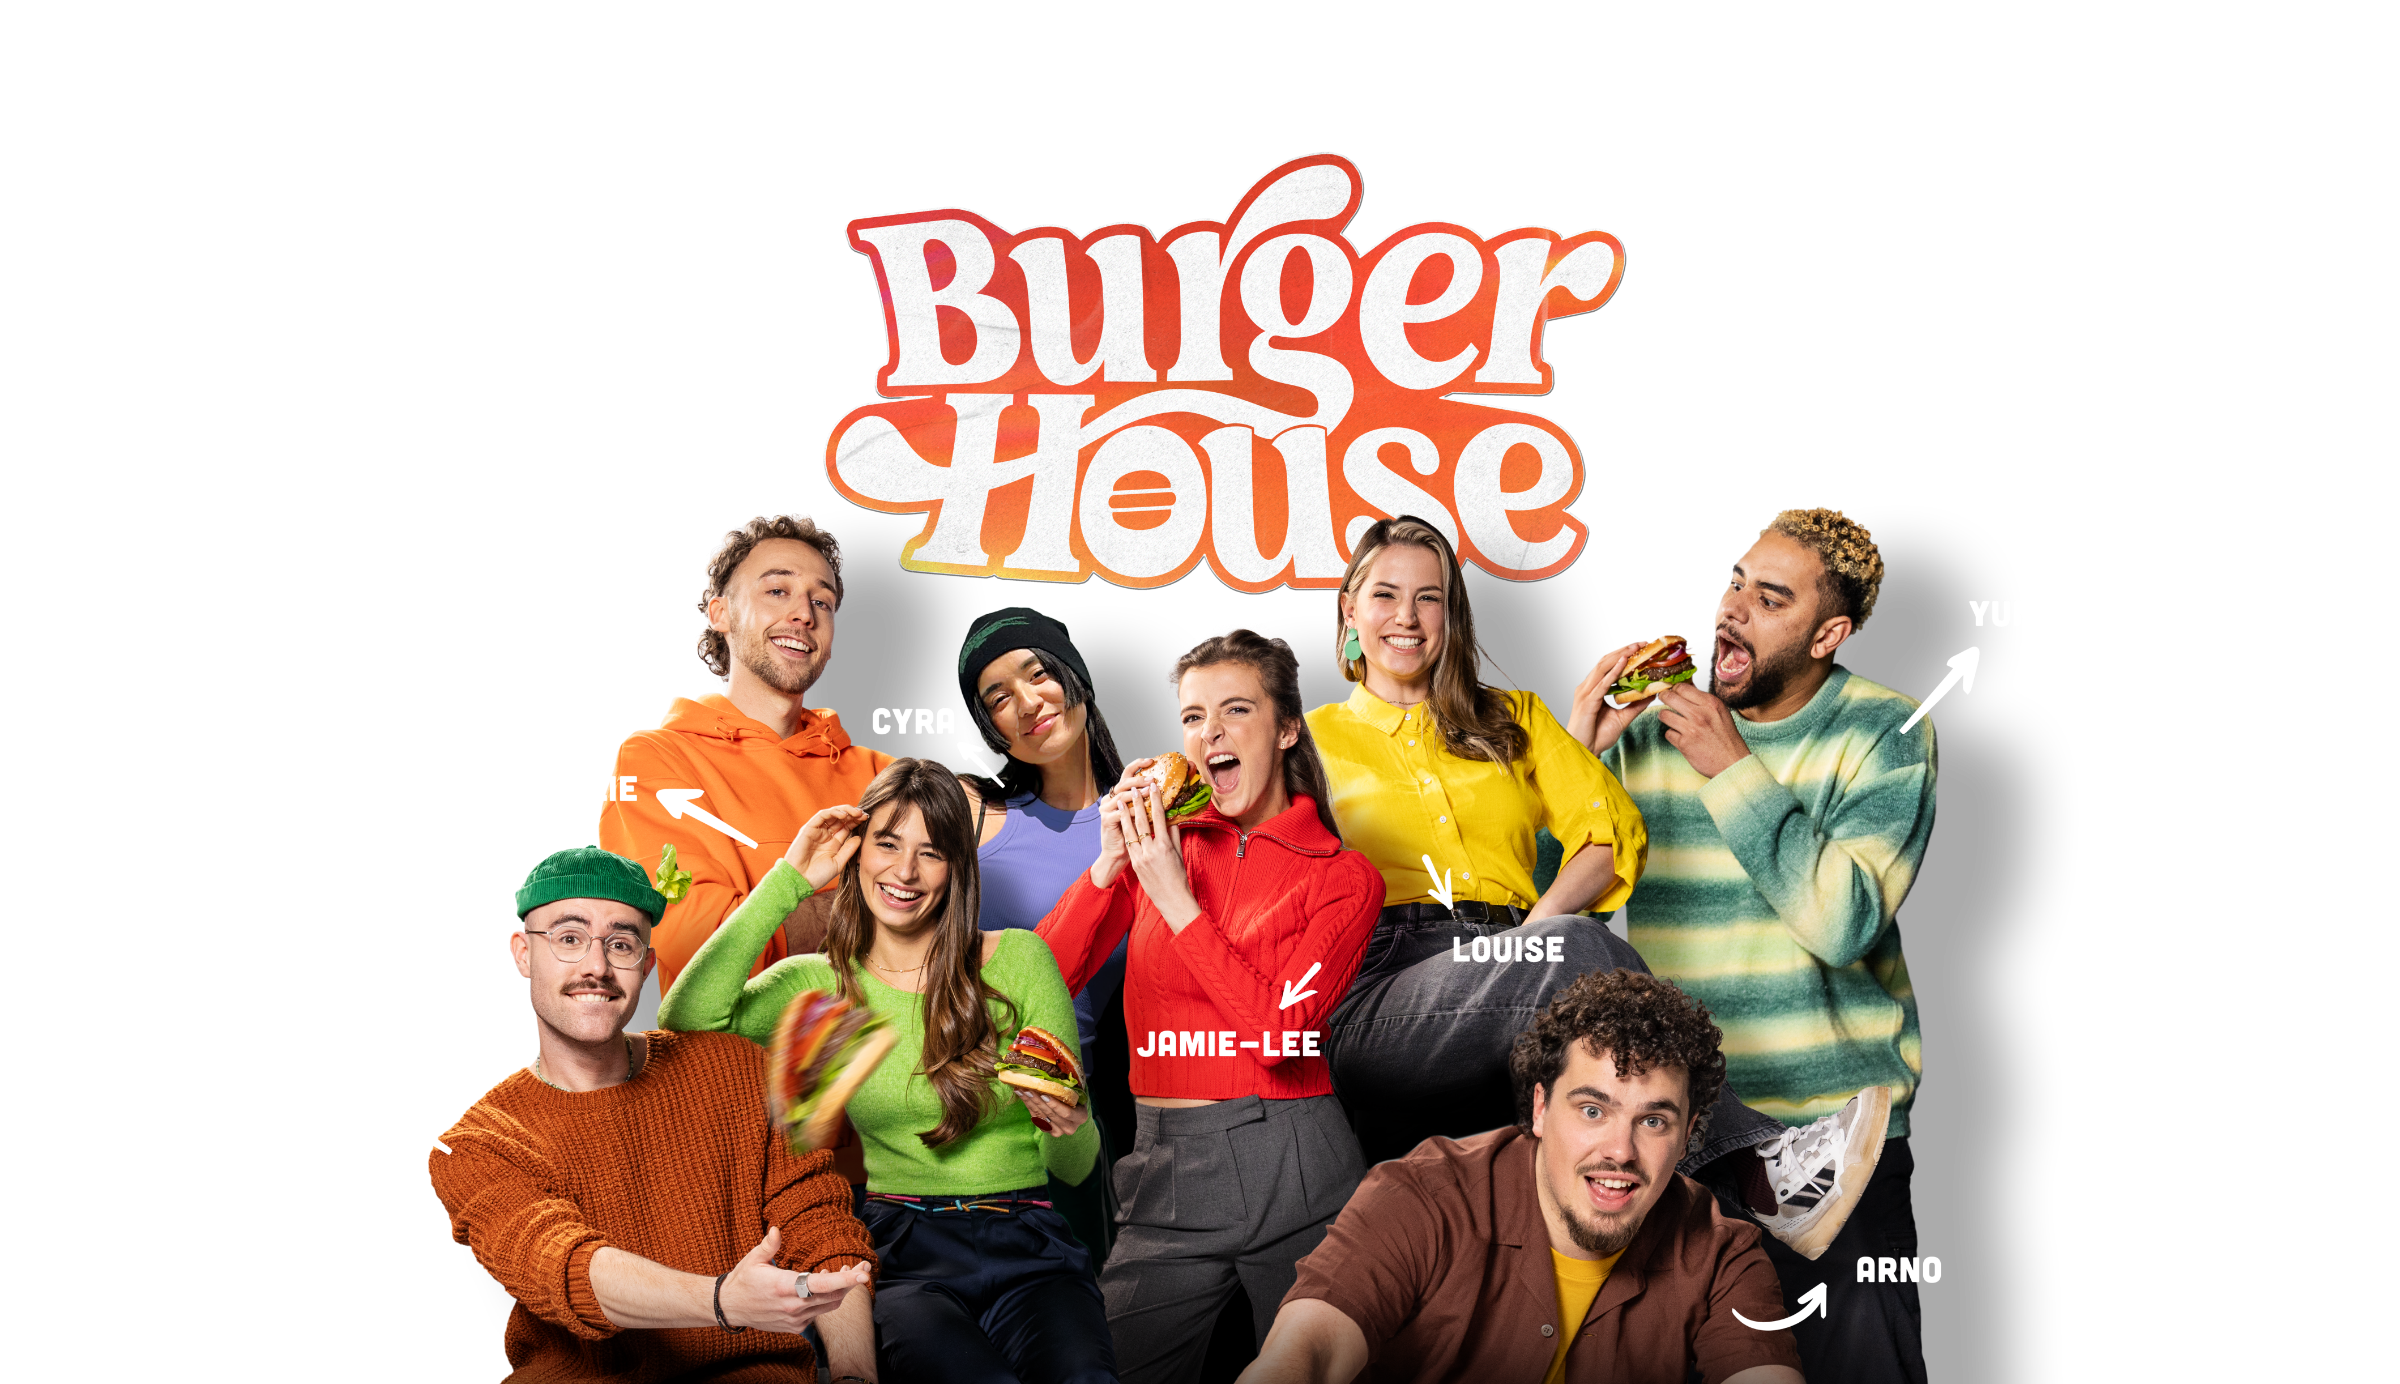 Burger House Kandidaten